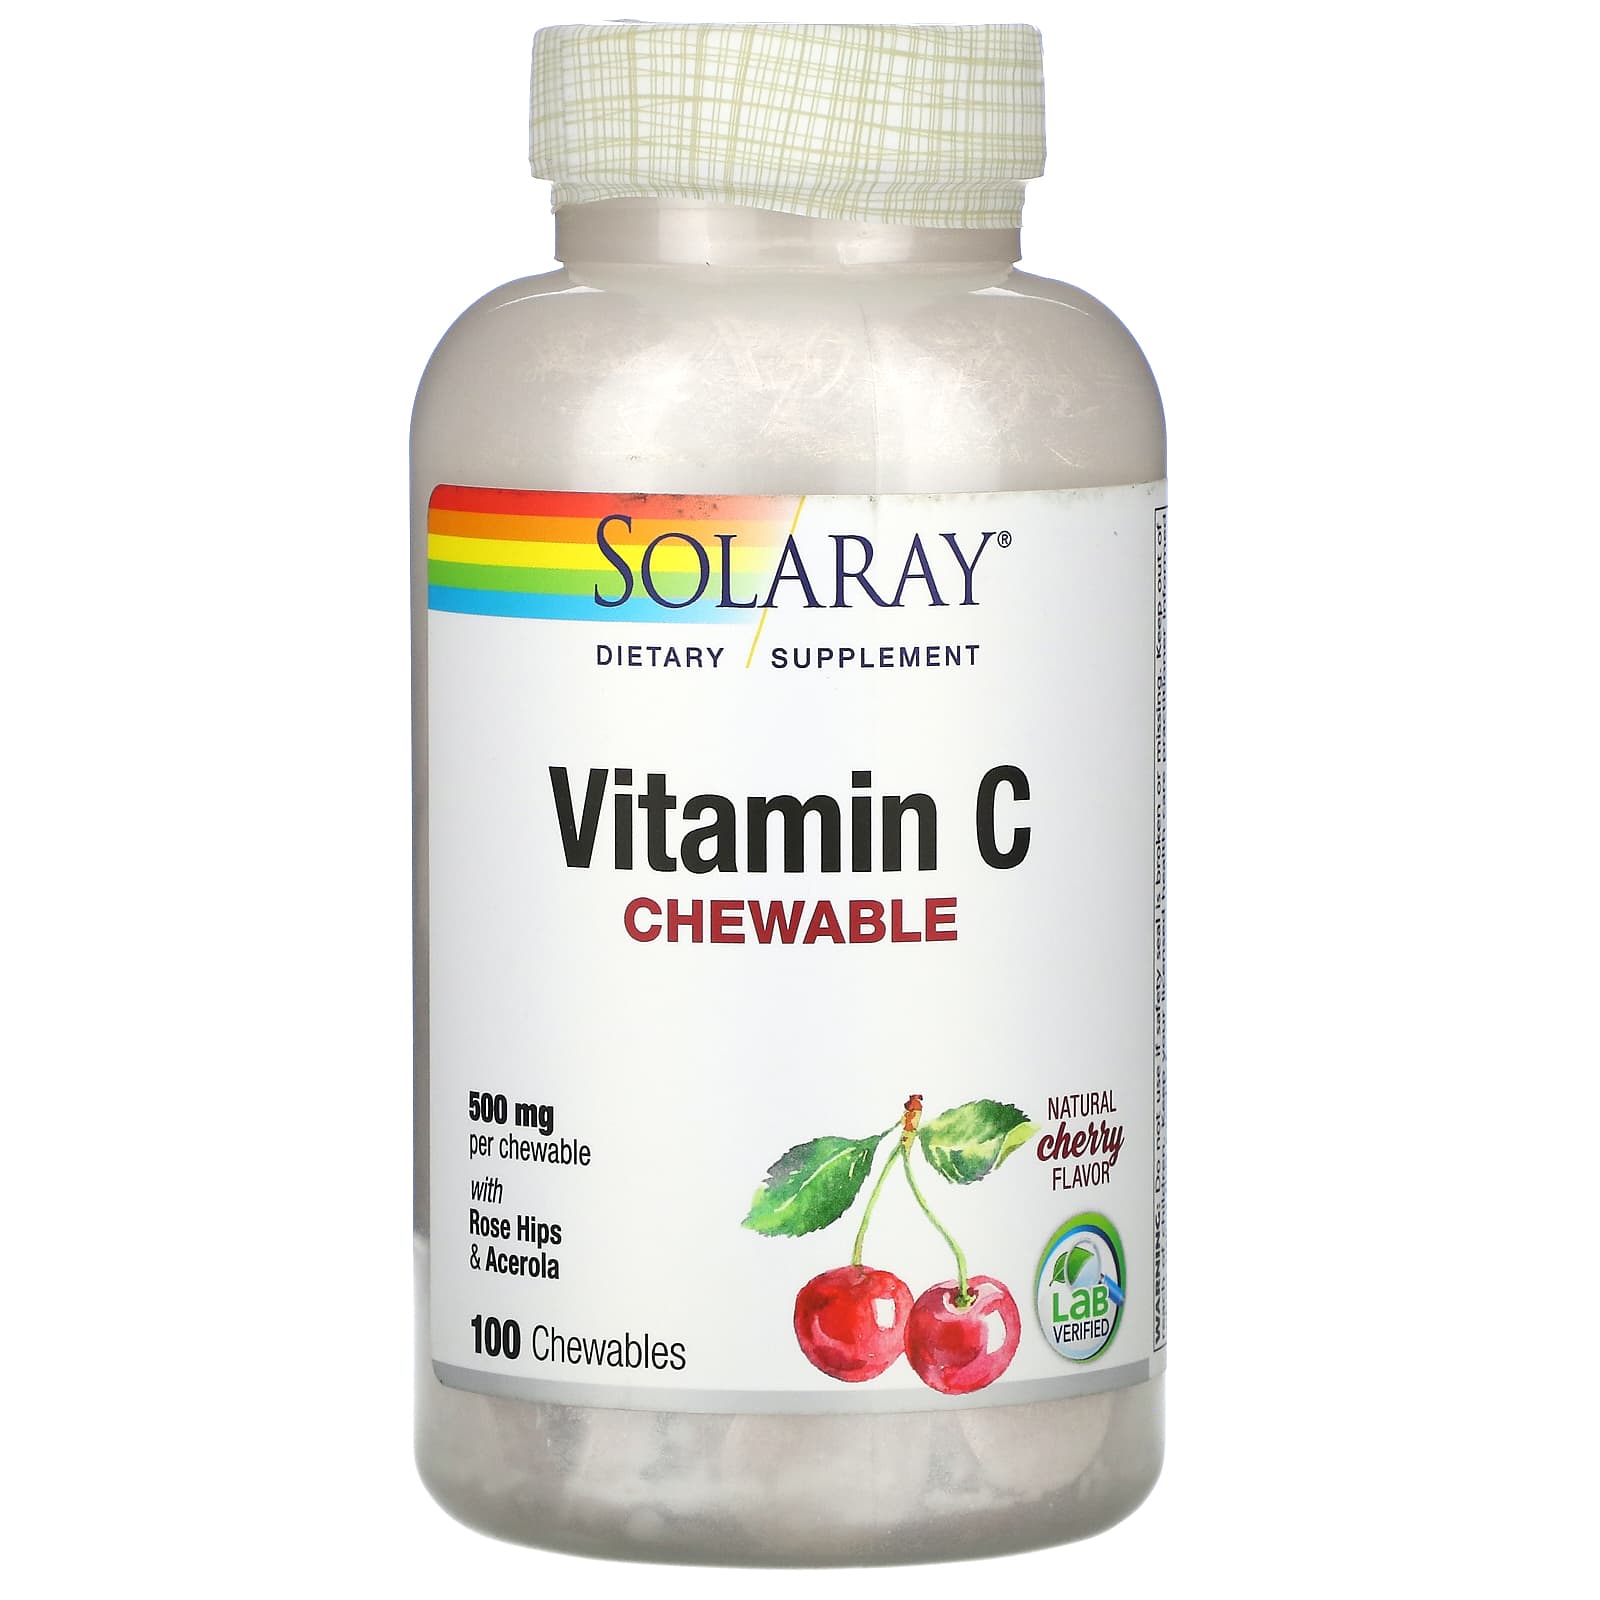 Chewable vitamin. Витамин с Solaray Reacta 500. Solaray витамины жевательные. Жевательные витамины для взрослых. Витамин Solaray c Chewable.